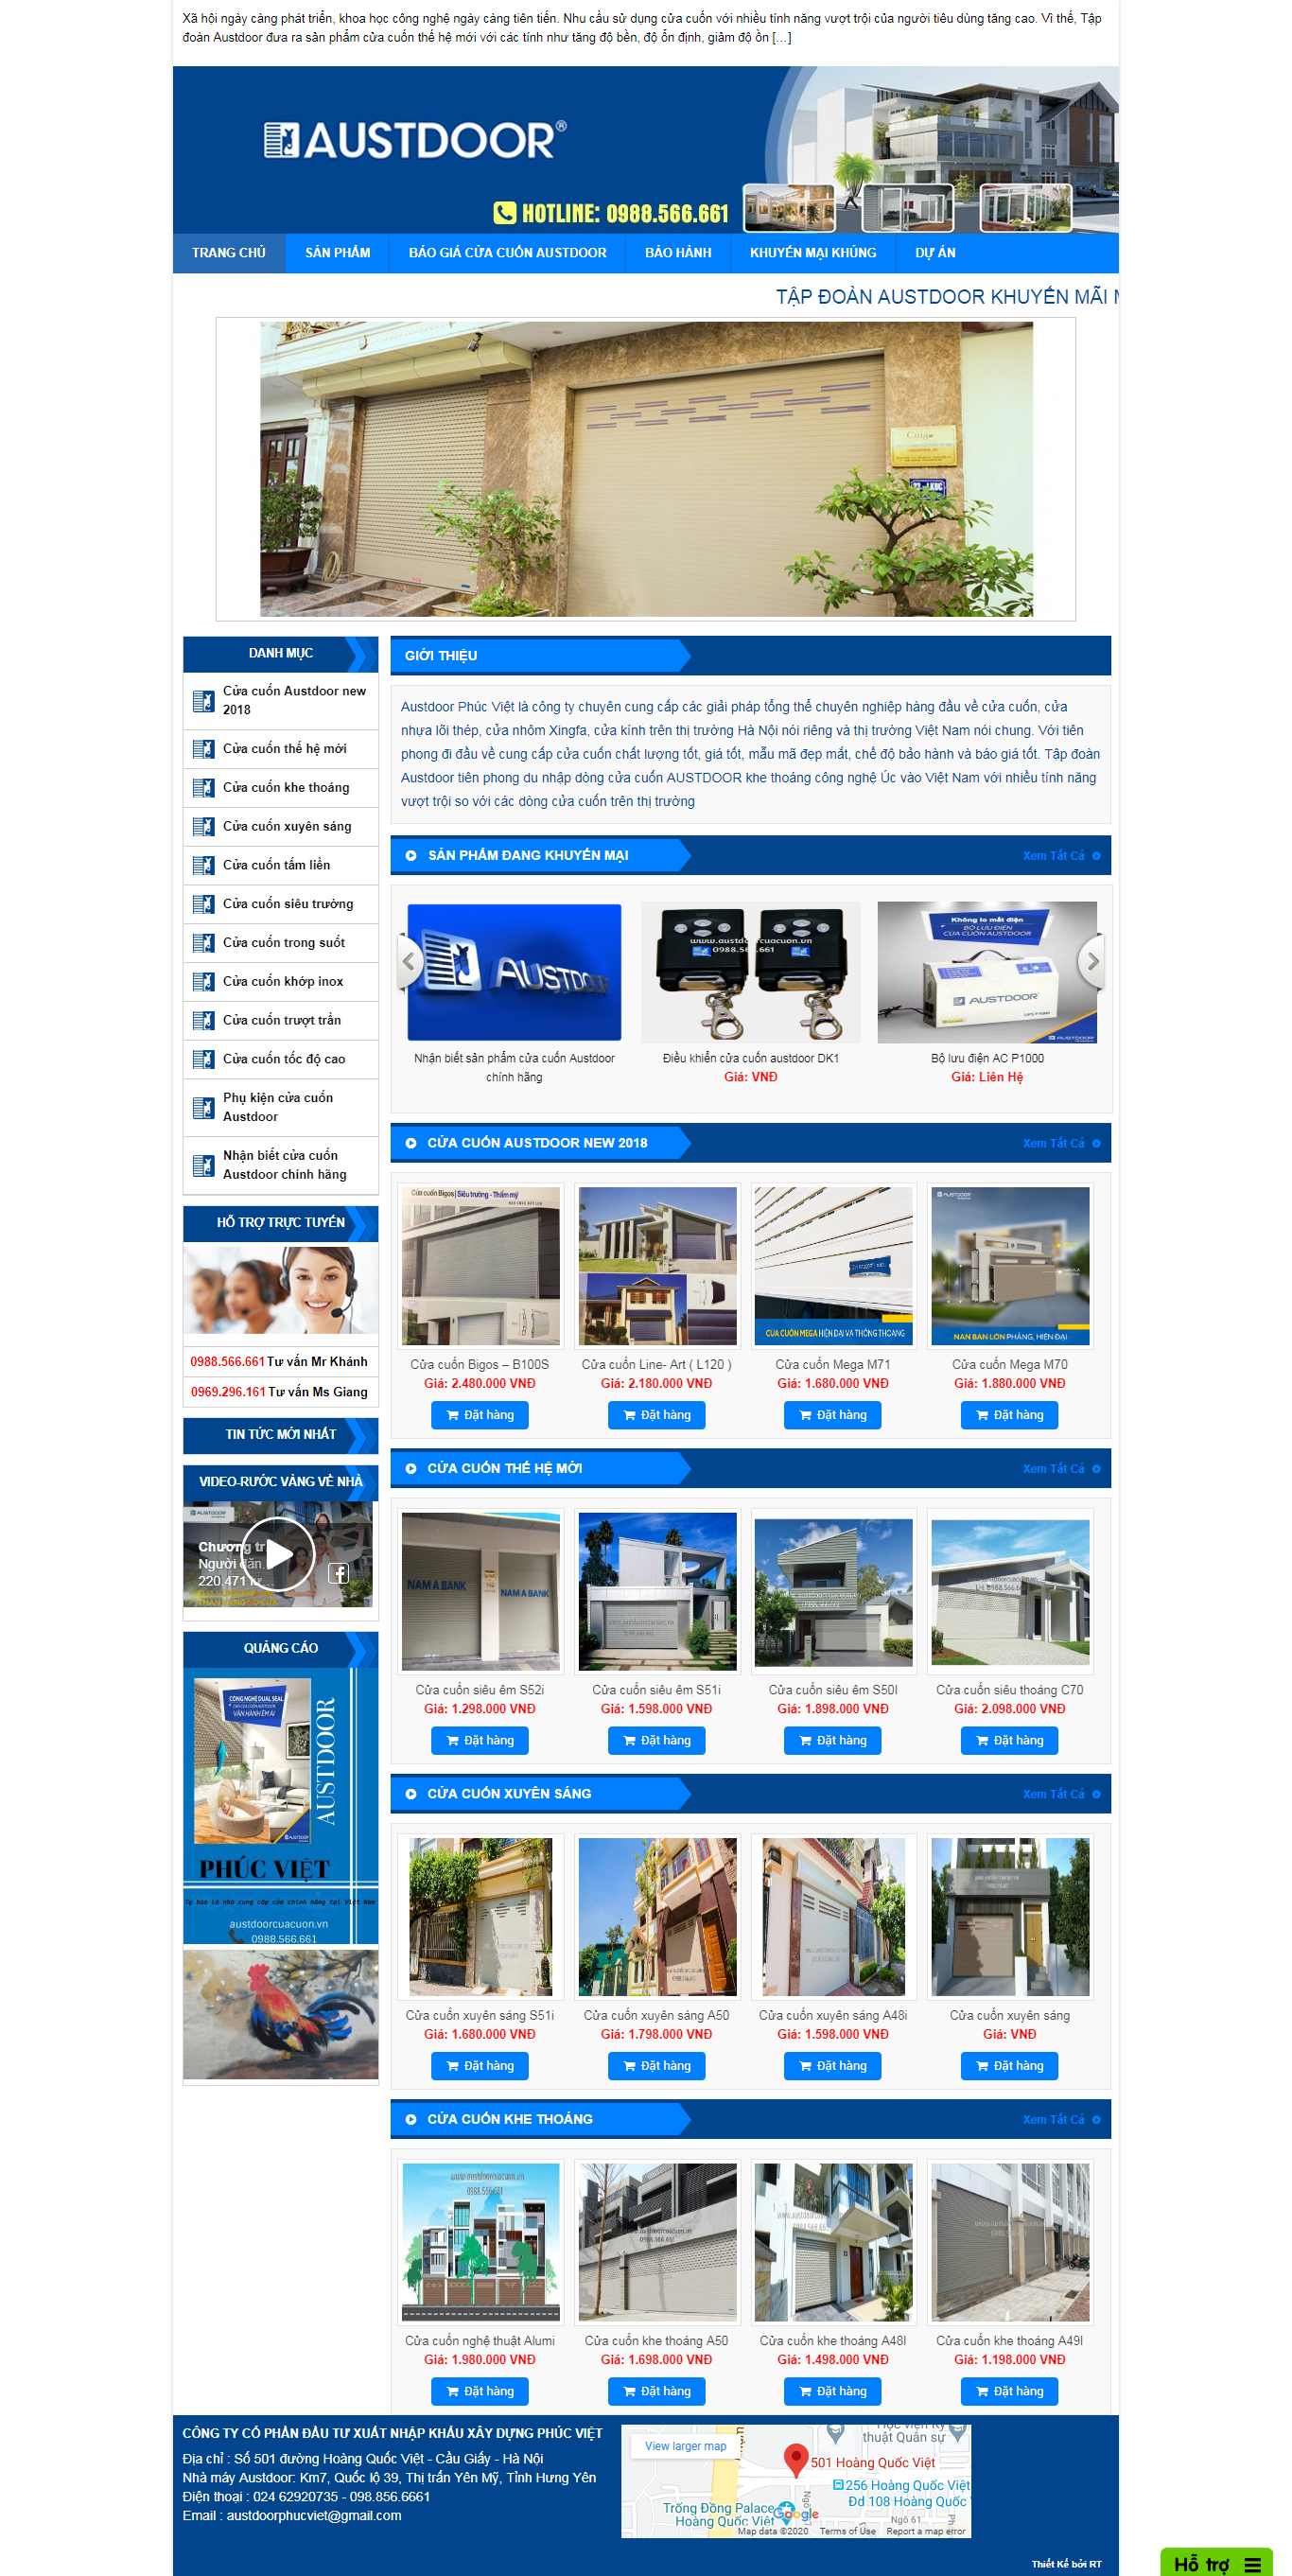 Thiết kế Website cửa cuốn - austdoorcuacuon.vn